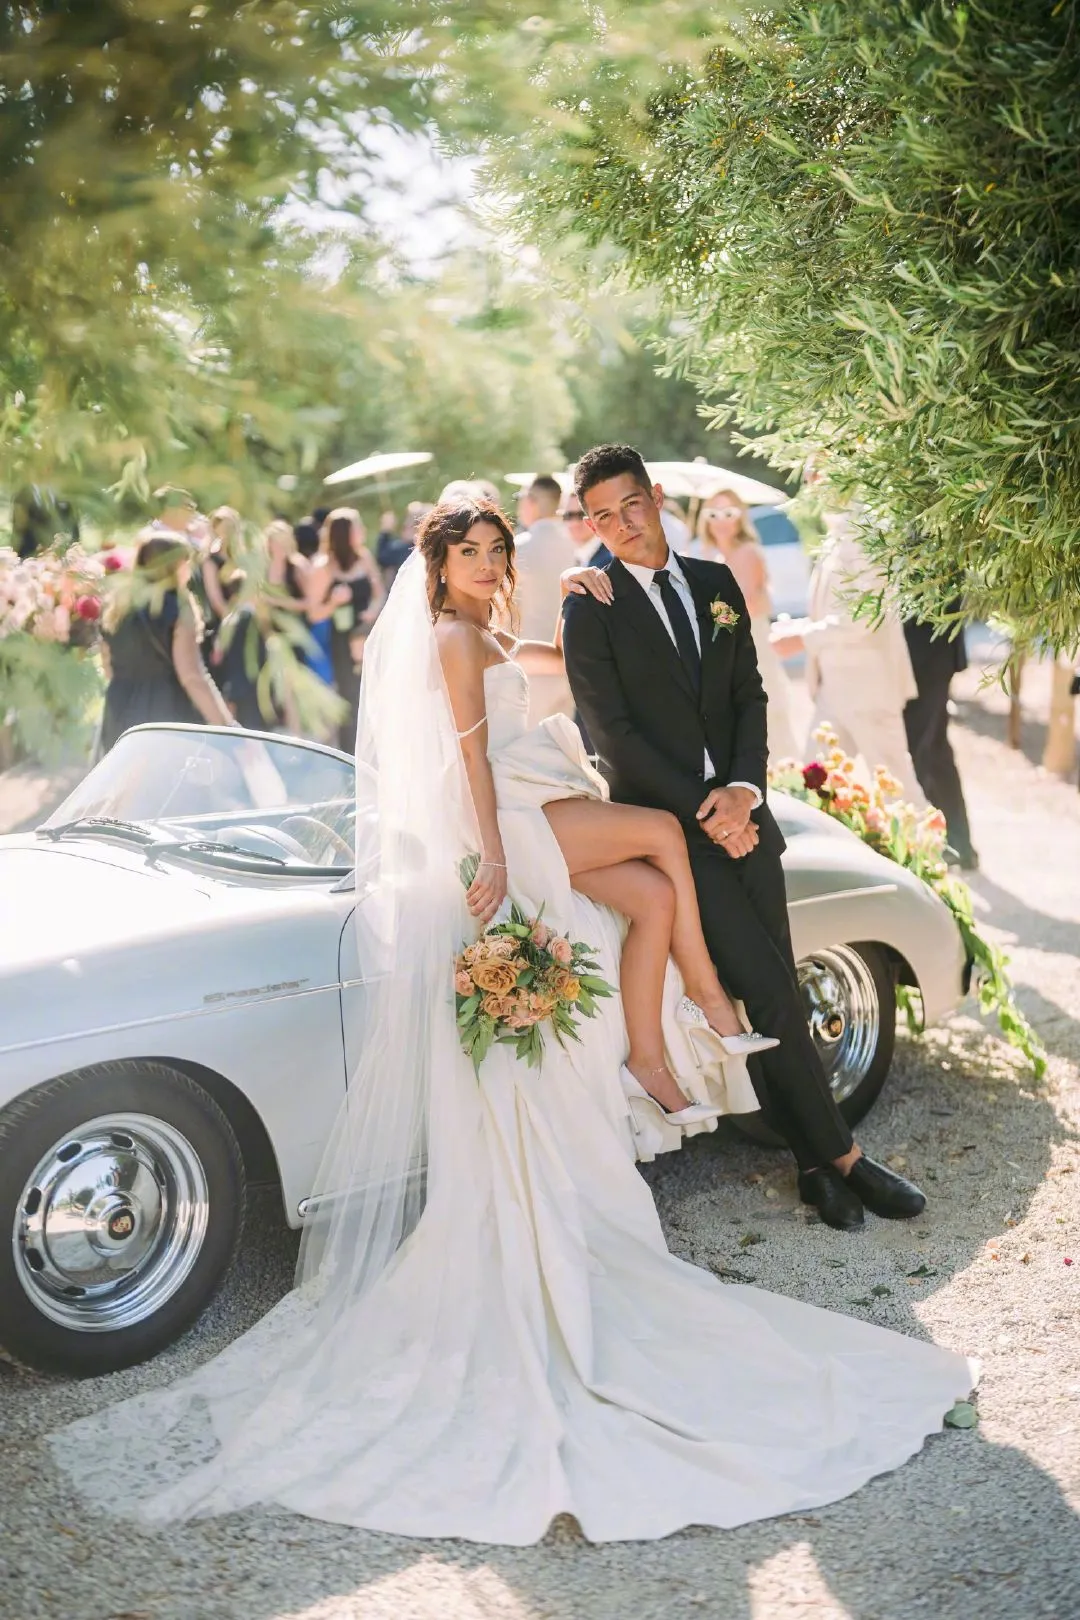 Sarah Hyland and Wells Adams' wedding photos exposed | FMV6